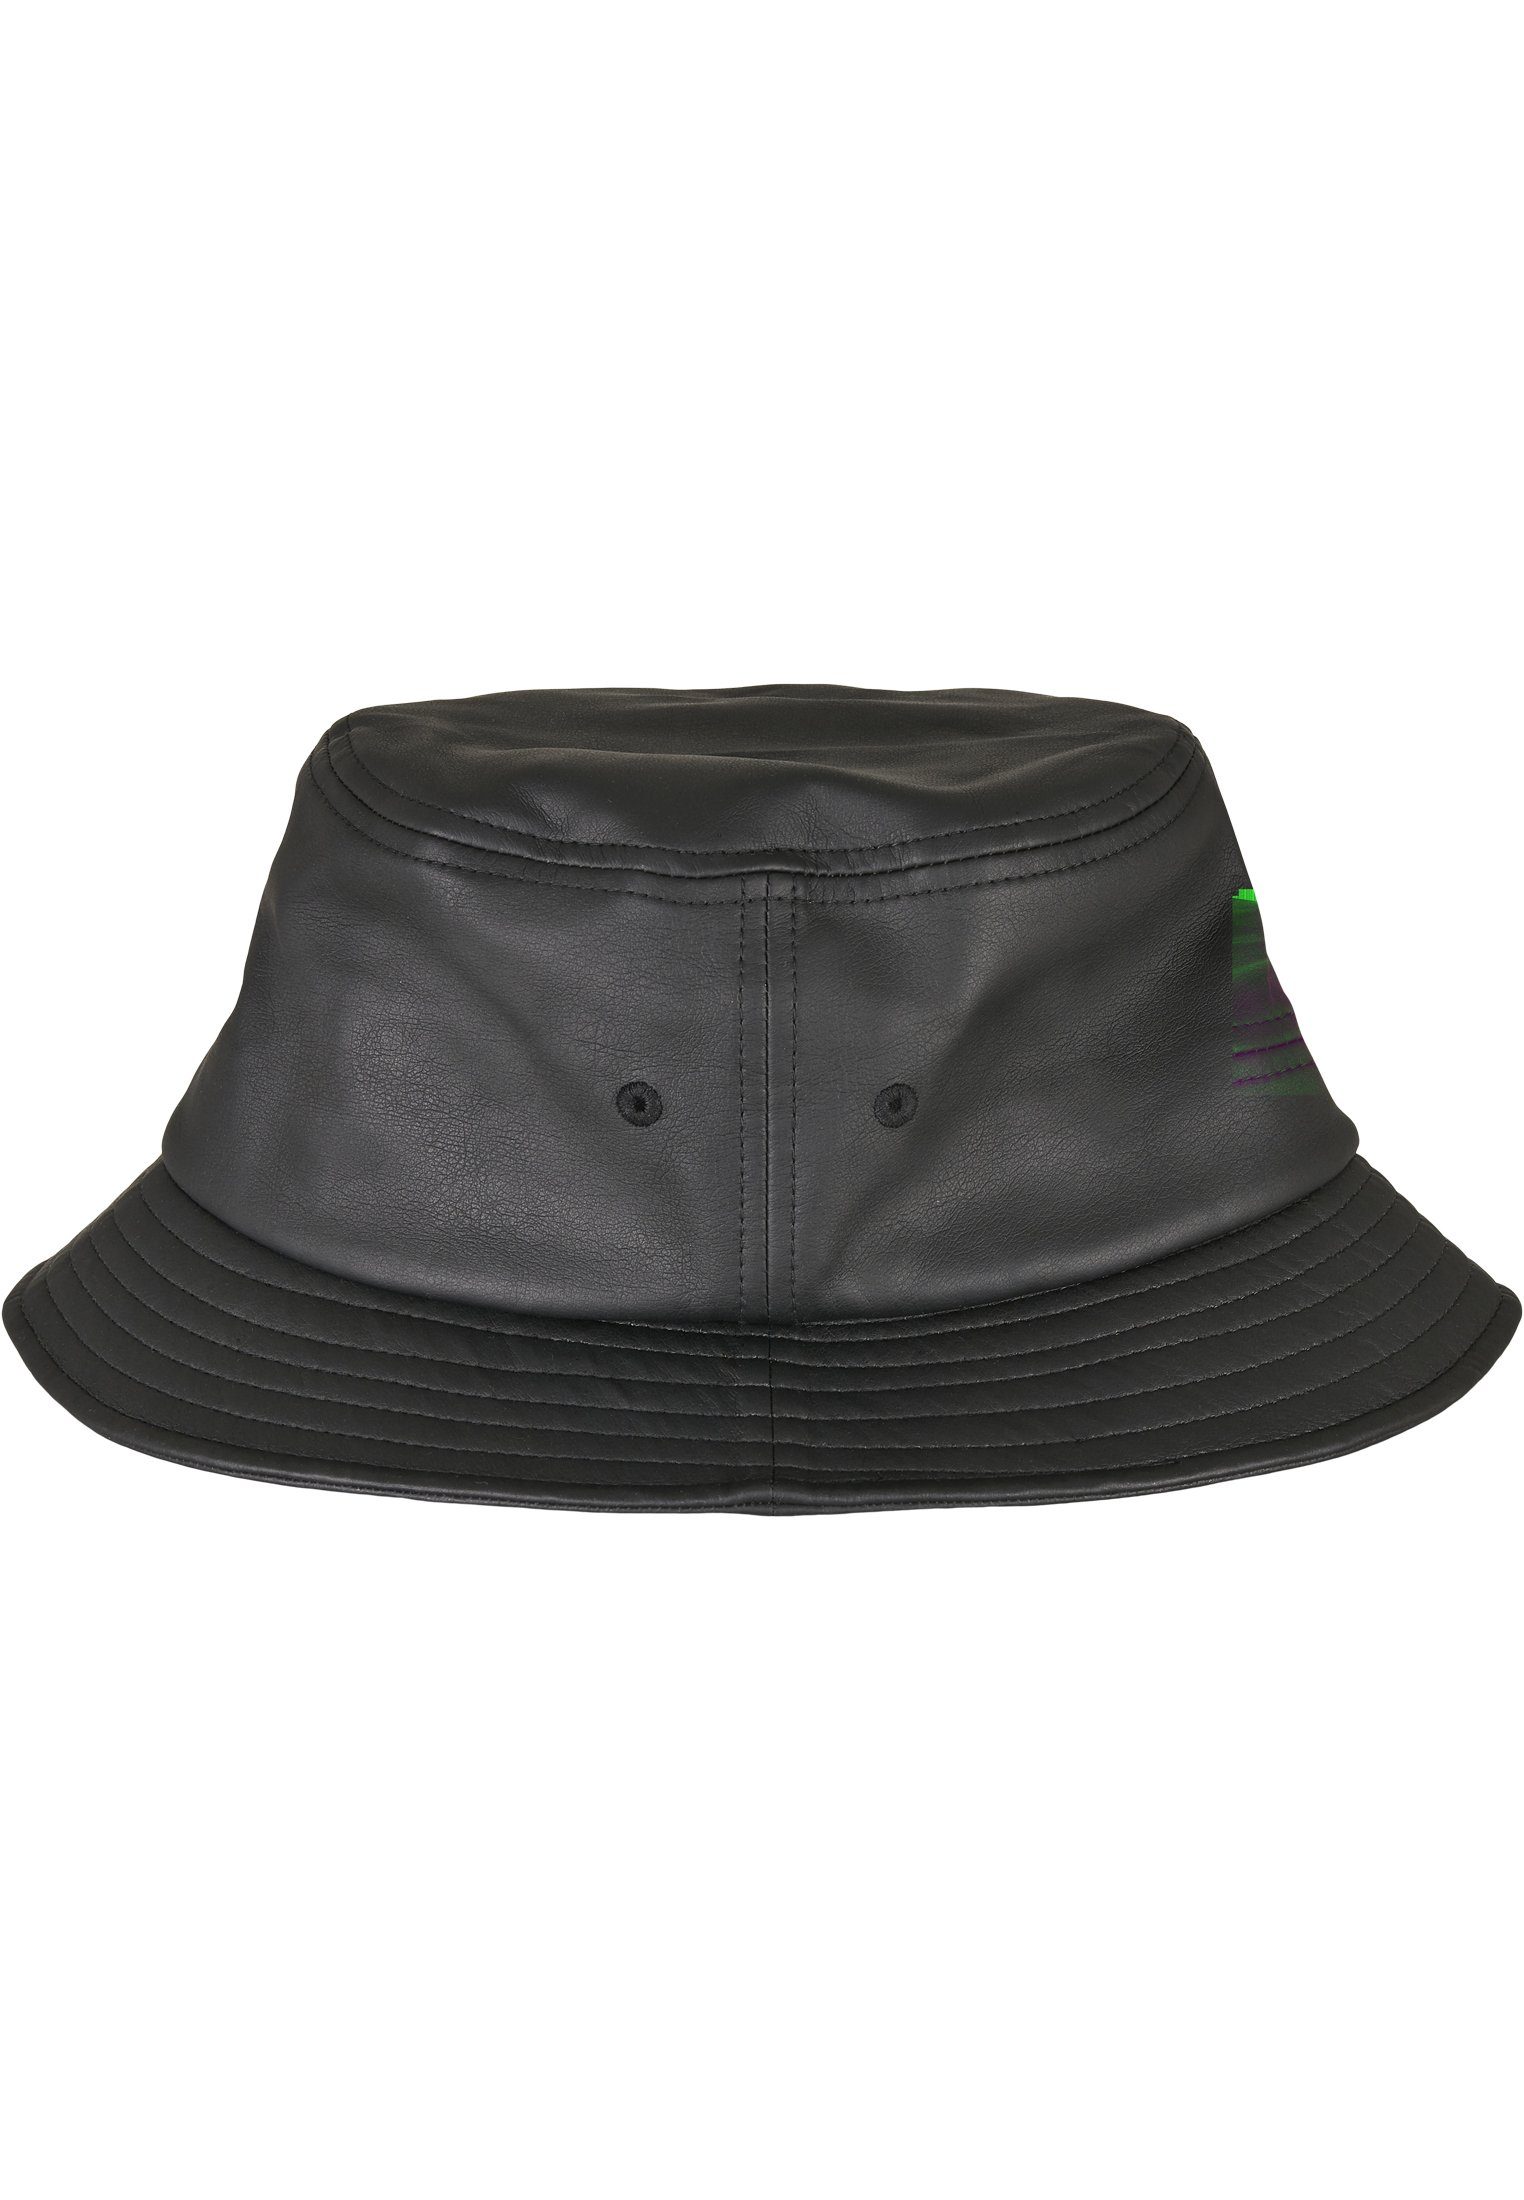 Hat Flex Bucket Flexfit Imitation Hat Bucket Cap Leather